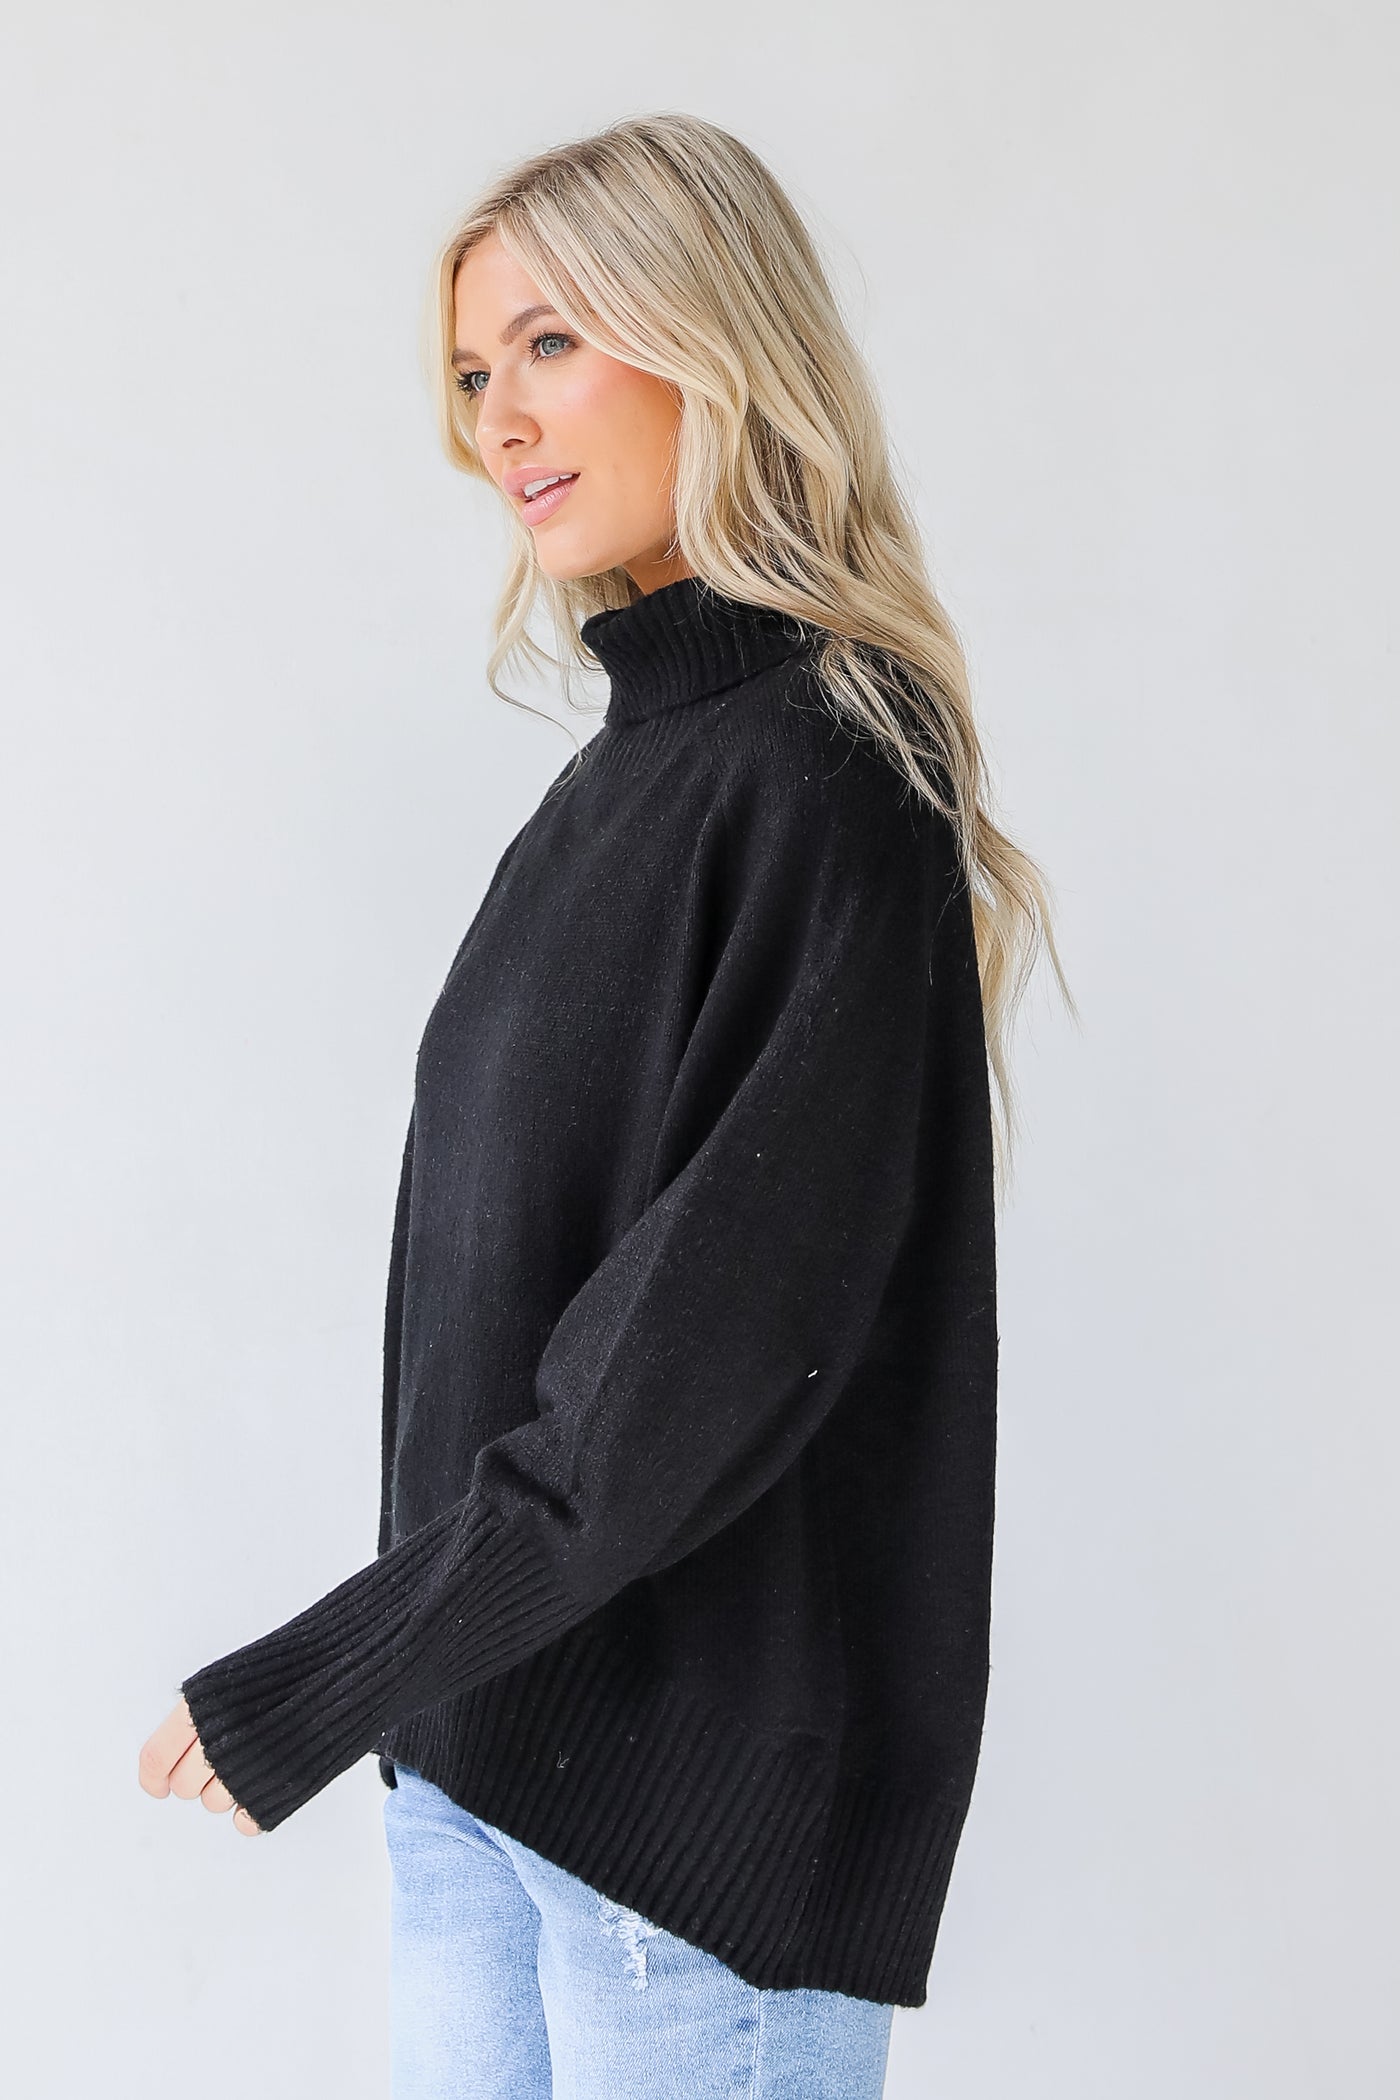 Turtleneck Sweater in black side view